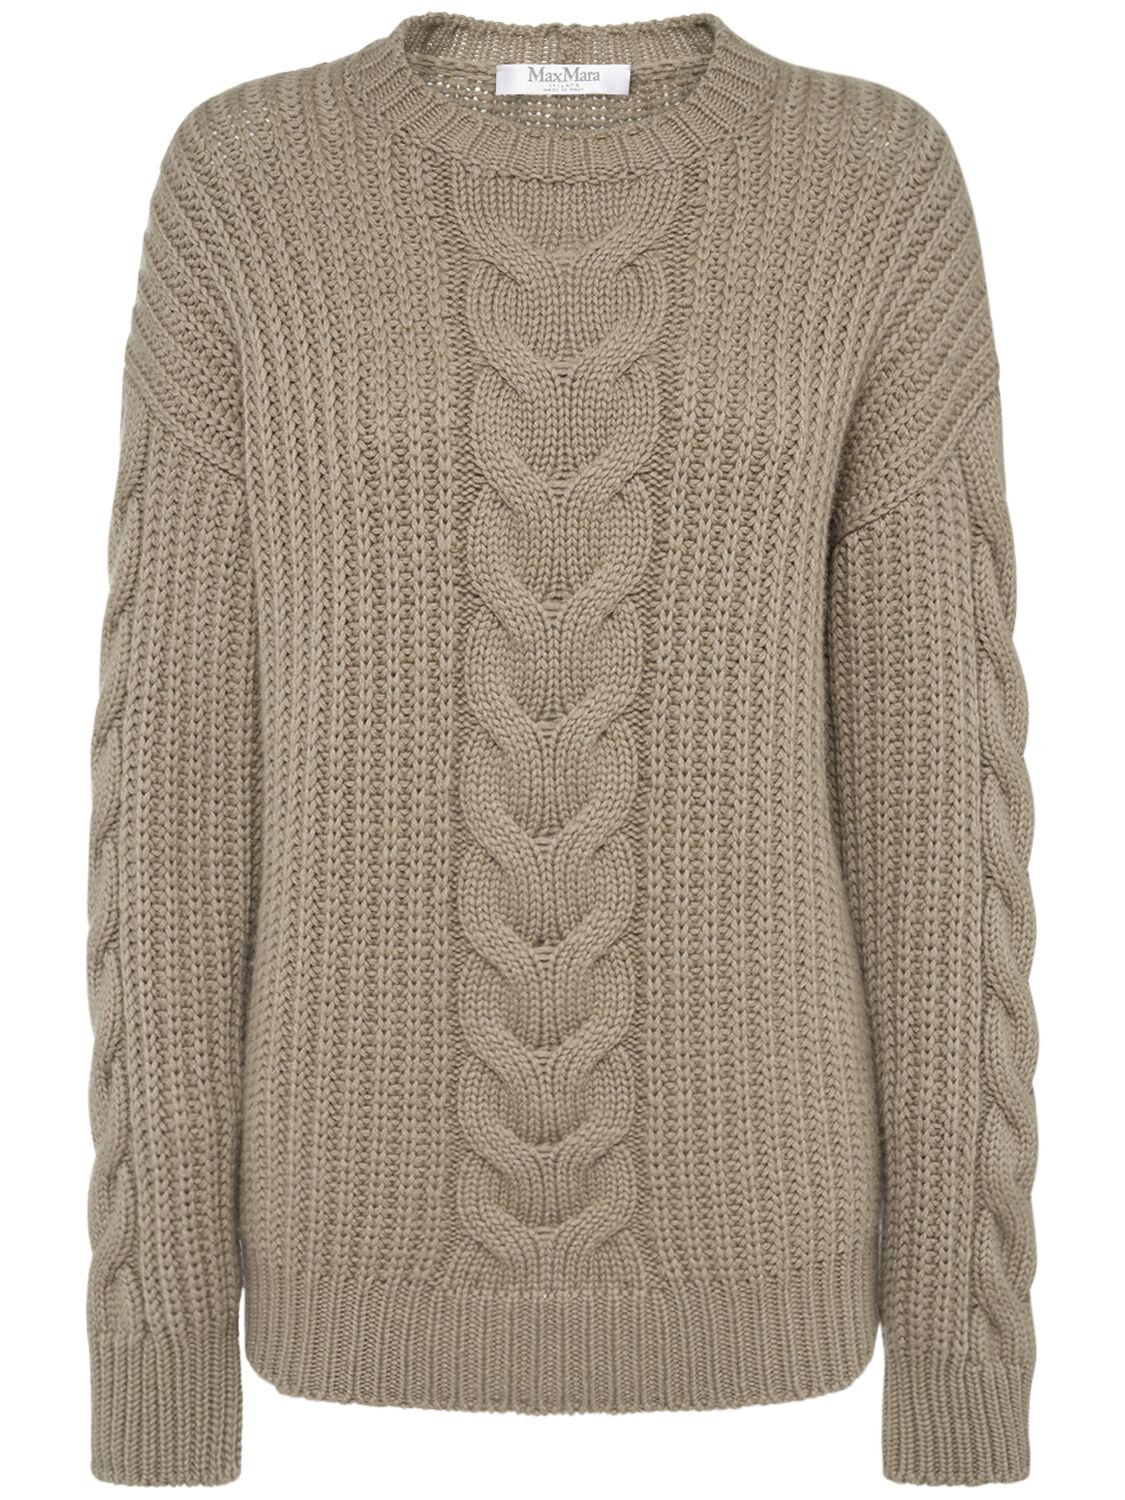 Image of Acciaio1234 Cotton Rib Knit Sweater